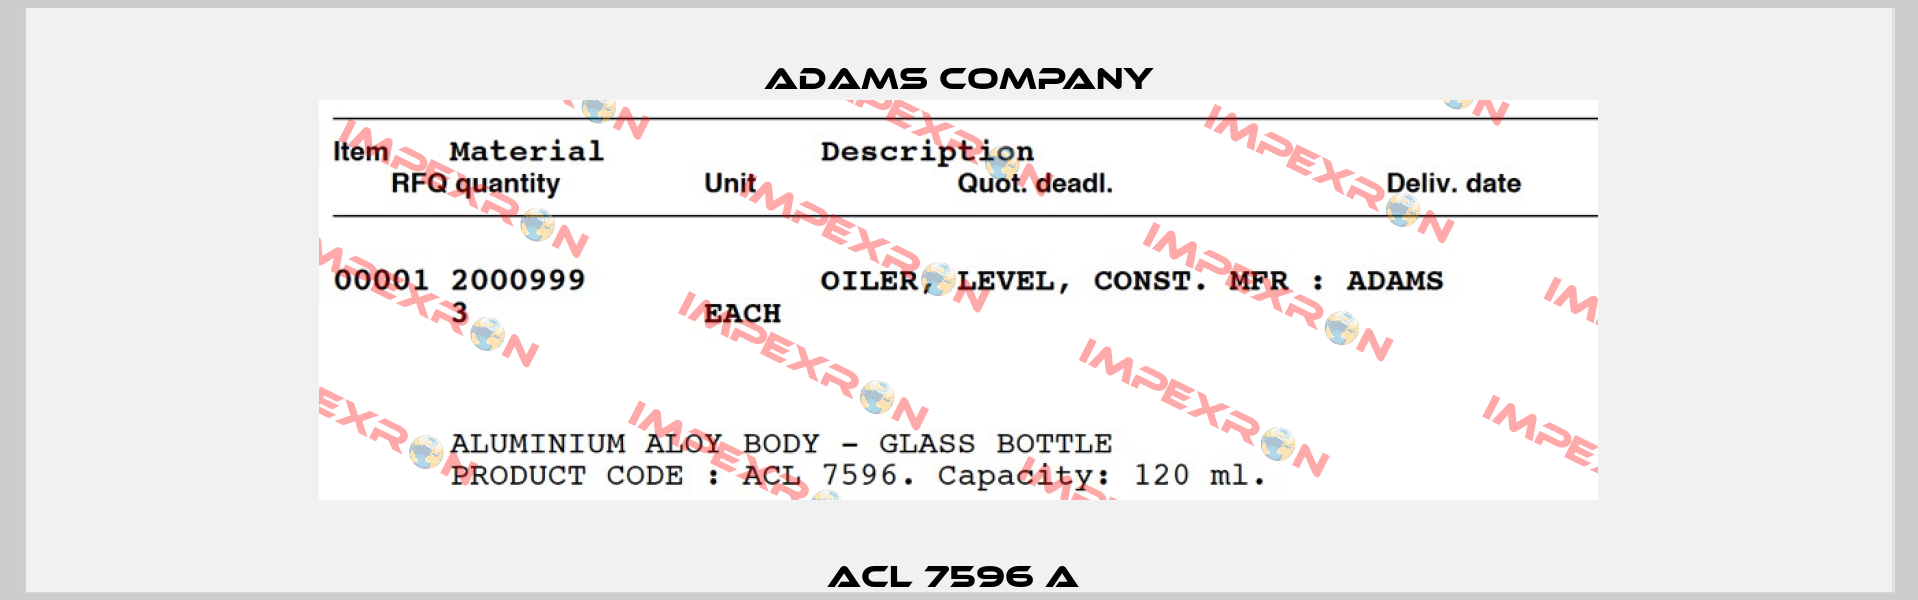 ACL 7596 A  Adams Company